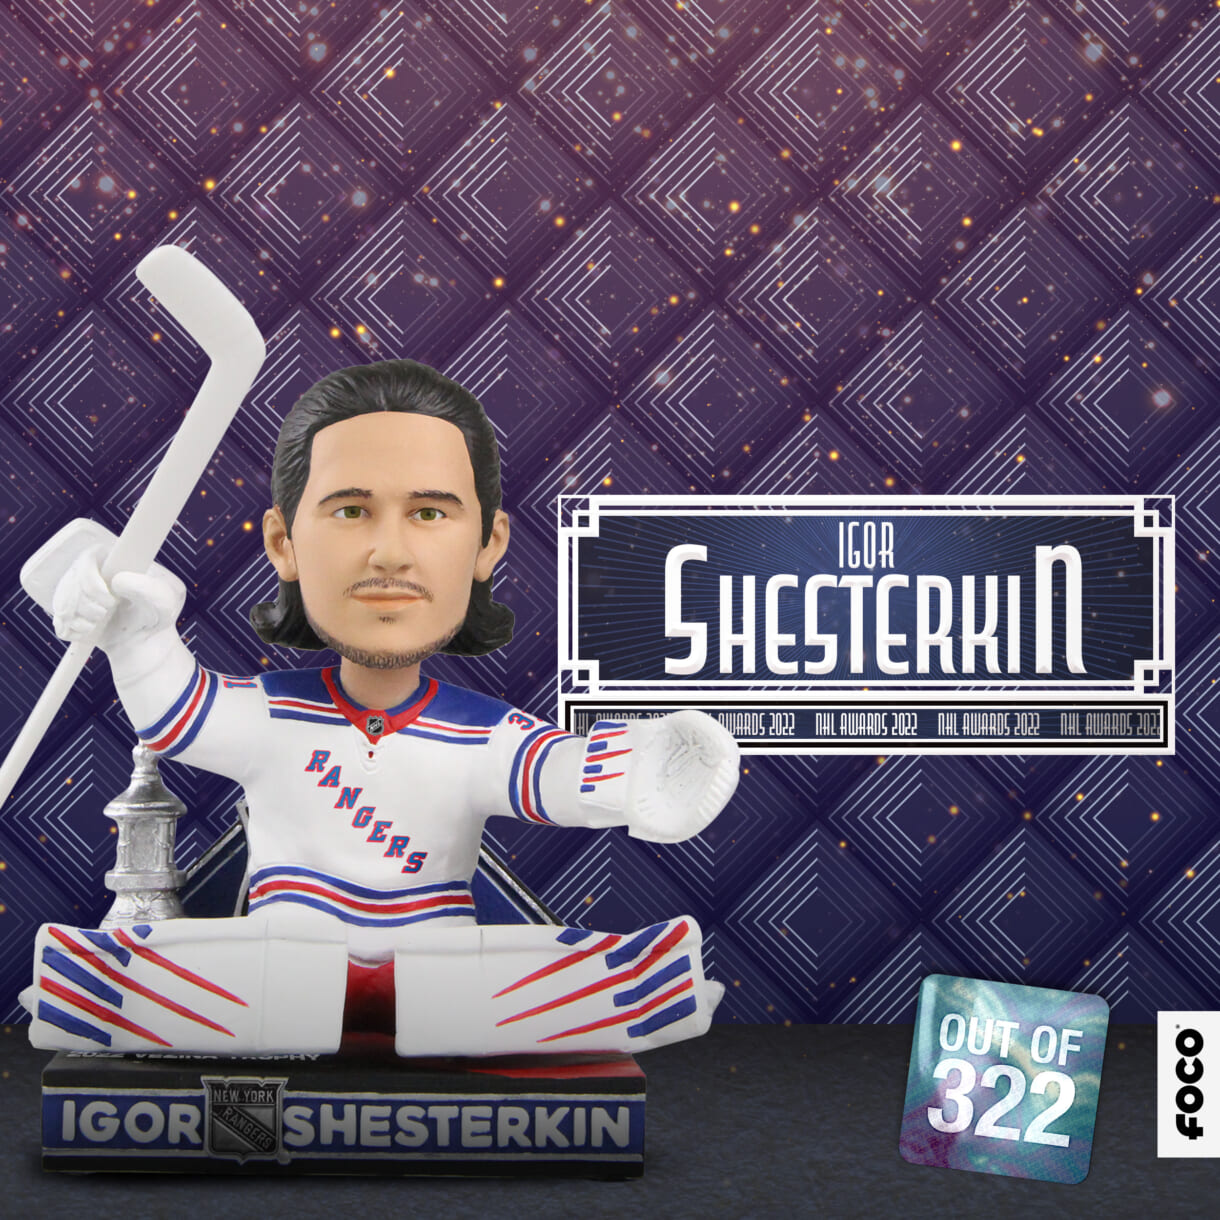 Foco releases an Igor Shesterkin Vezina Trophy Bobblehead